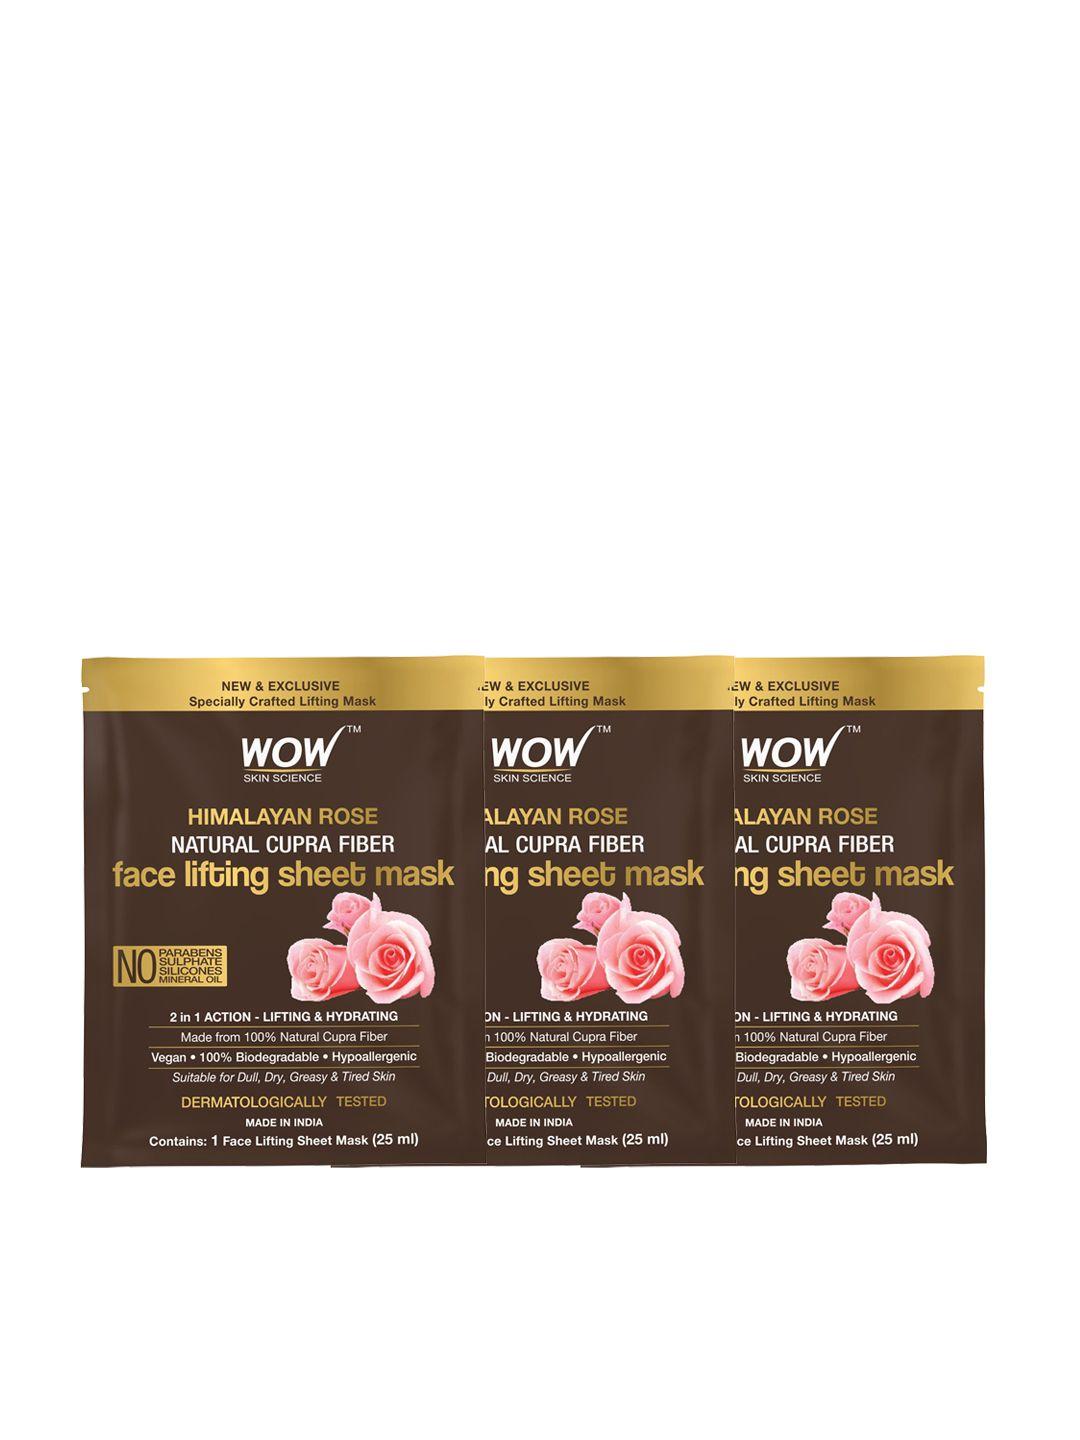 wow skin science set of 3 himalayan rose natural cupra fiber sheet mask - 25 ml each